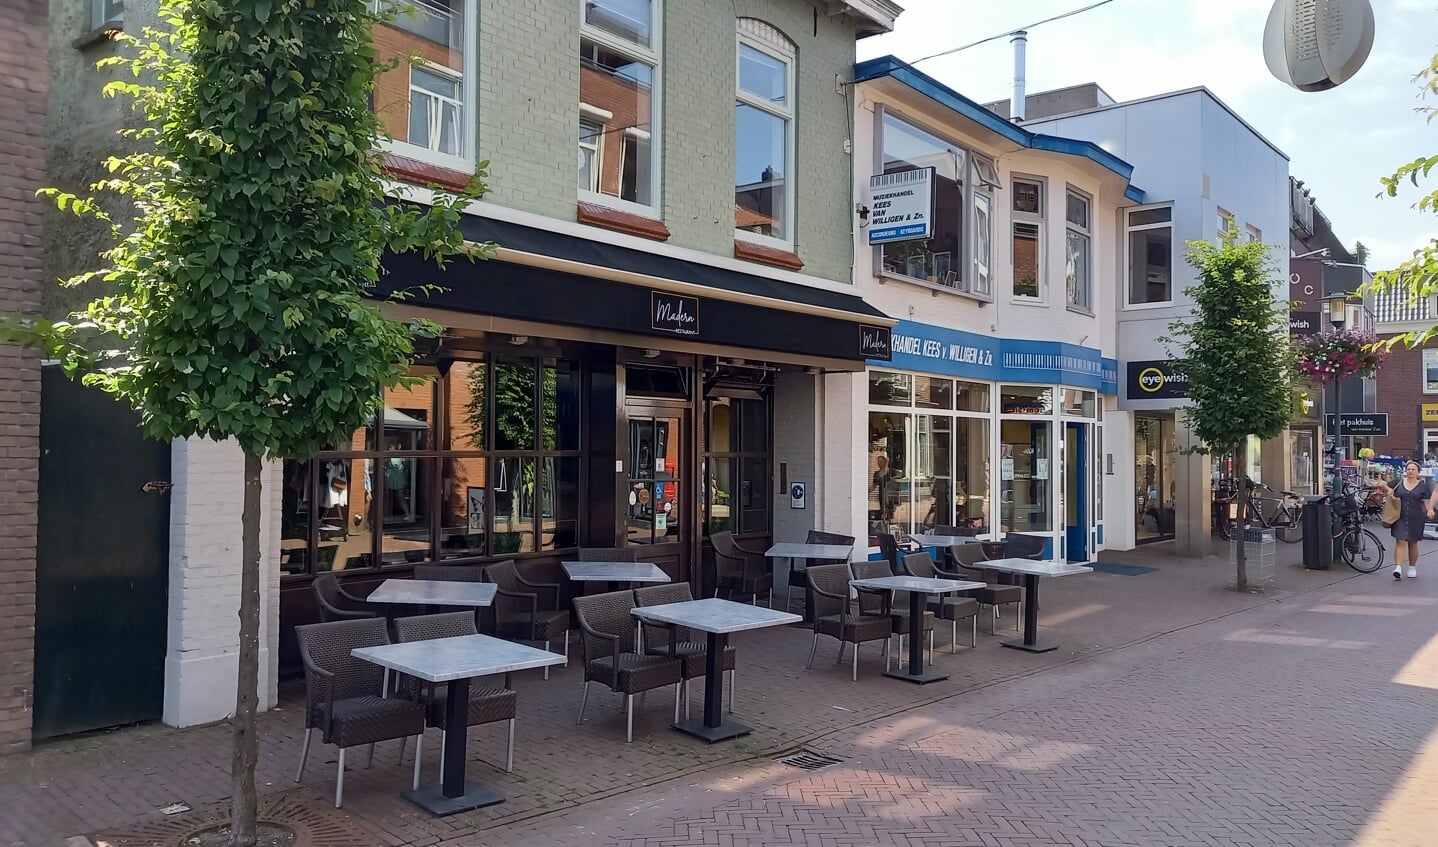 Restaurant Madern aan de Langstraat in Barneveld.